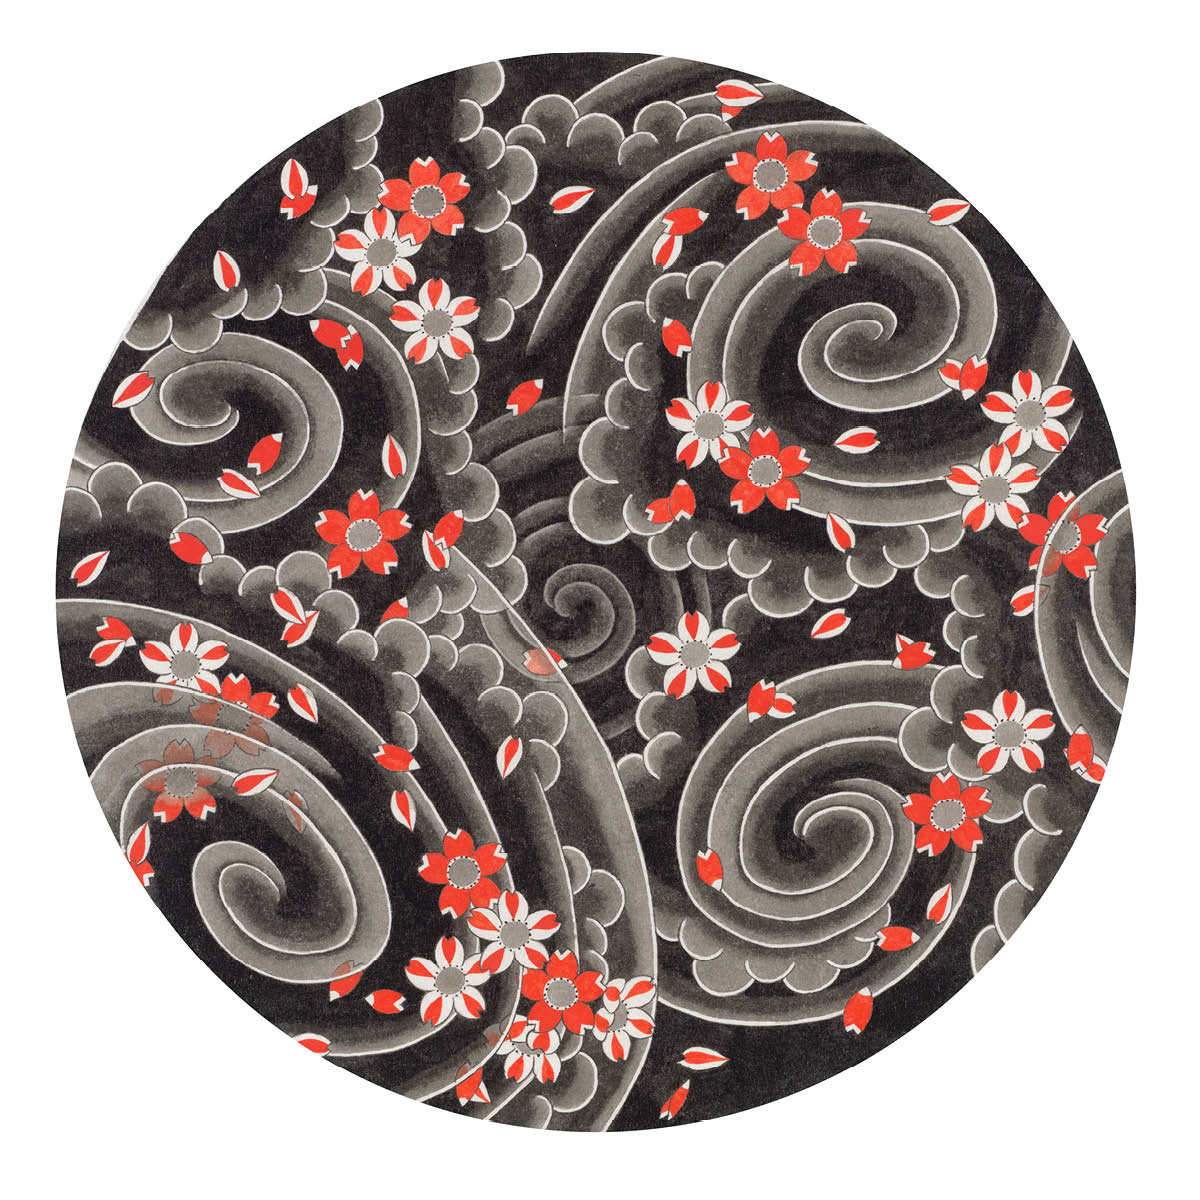 KSO-03 Sakura Fubuki Wallpaper by KENSHO II for NLXL